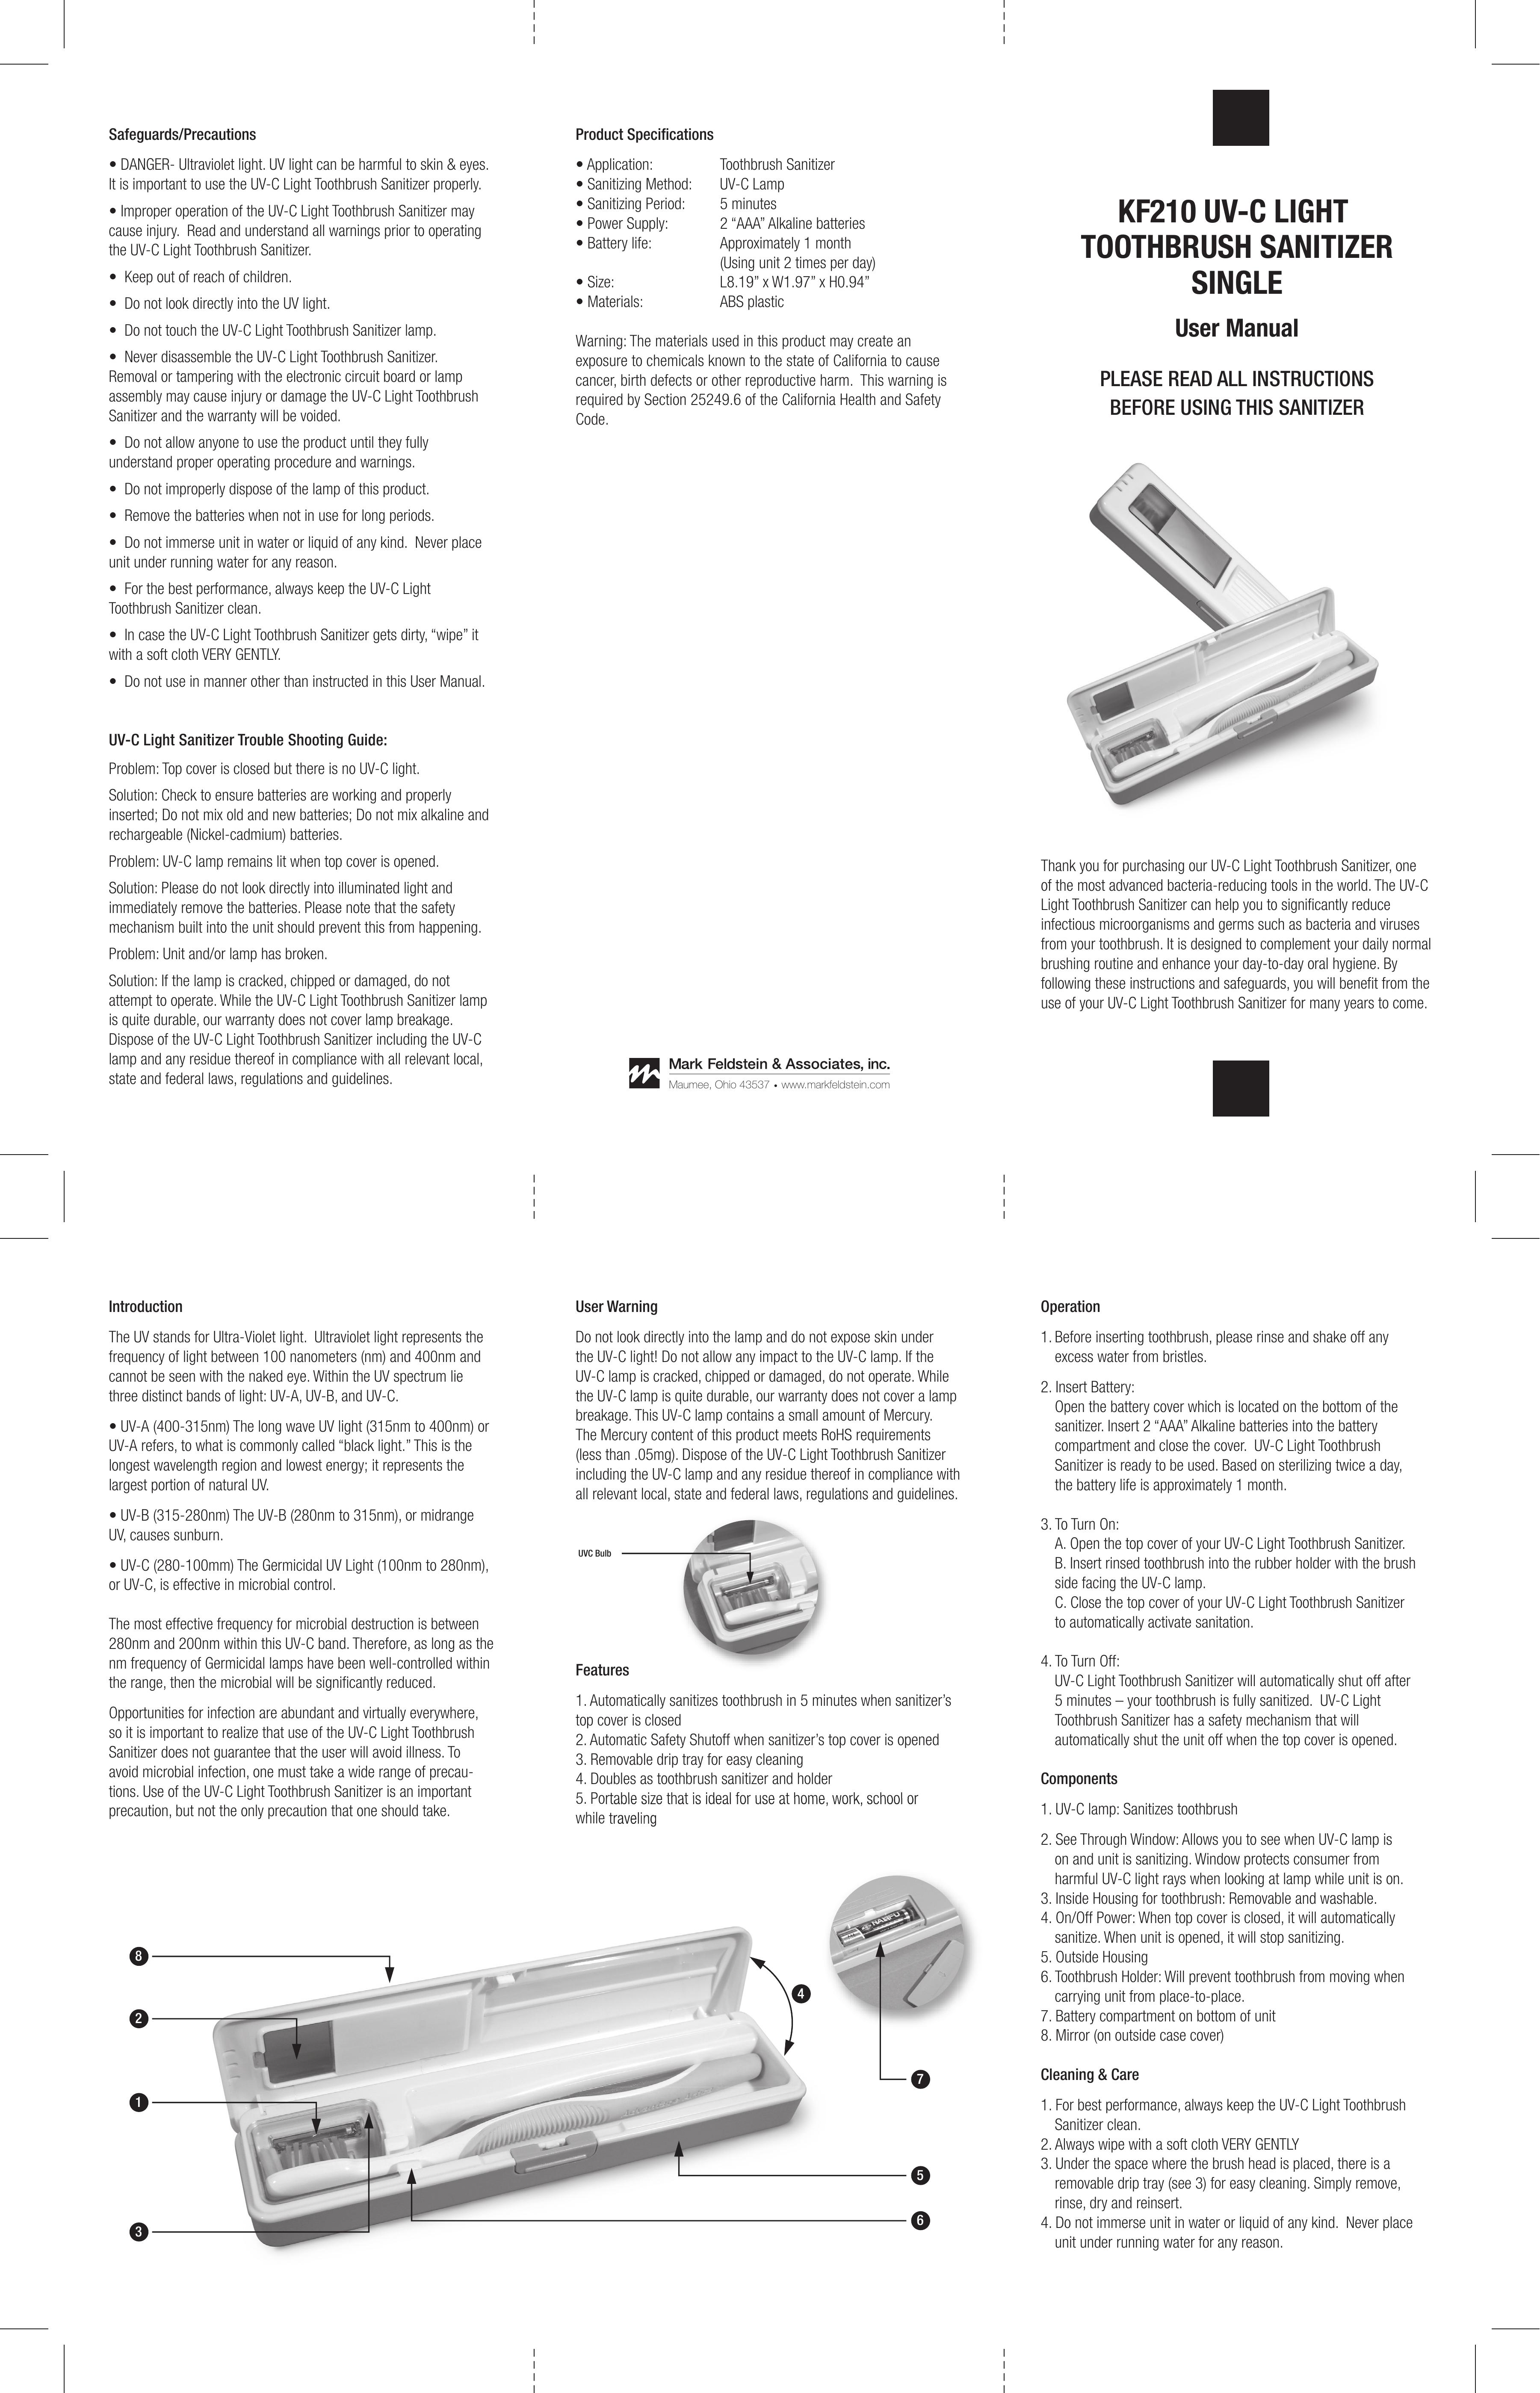 Mark Feldstein & Assoc KF210 Electric Toothbrush User Manual